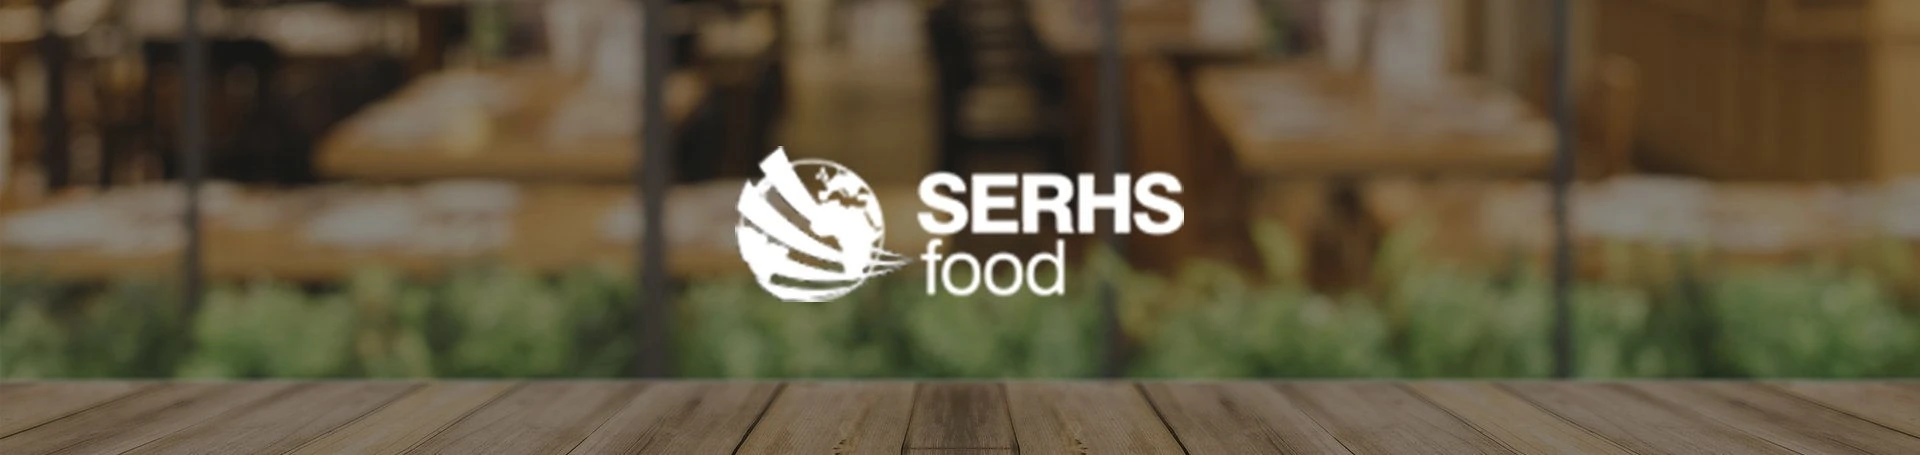 SERHS Food, nuevo cliente Marketing Outsourcing